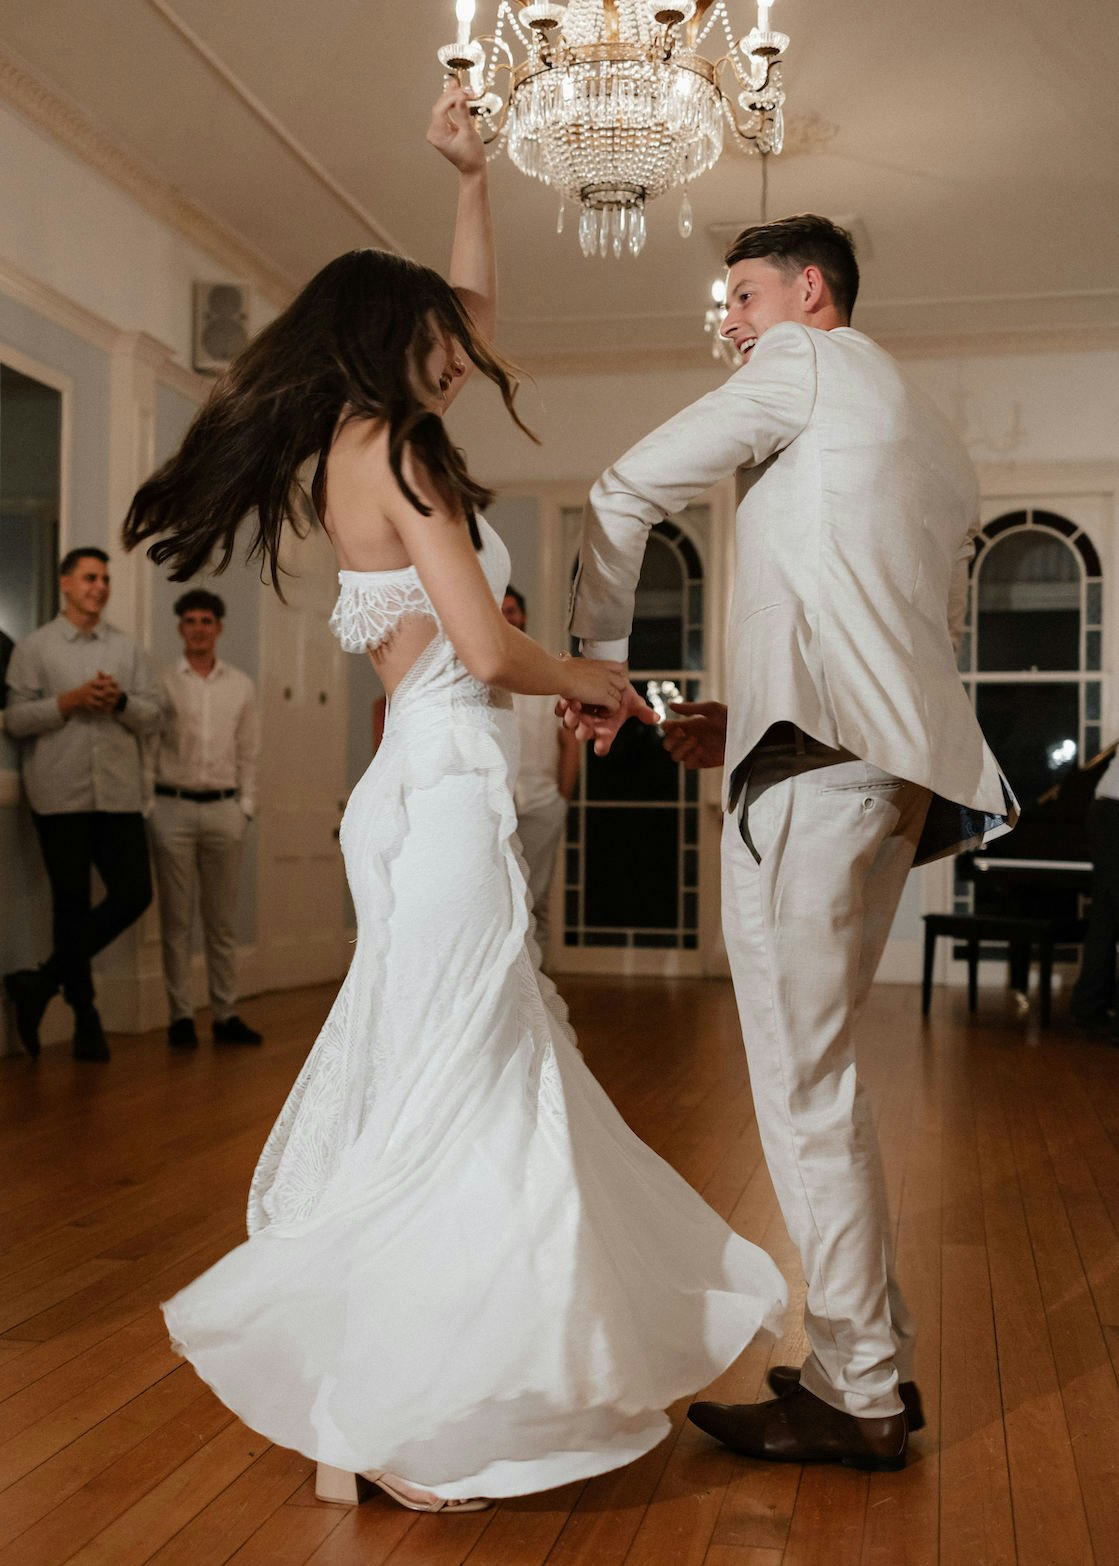 Bride and groom dancing 